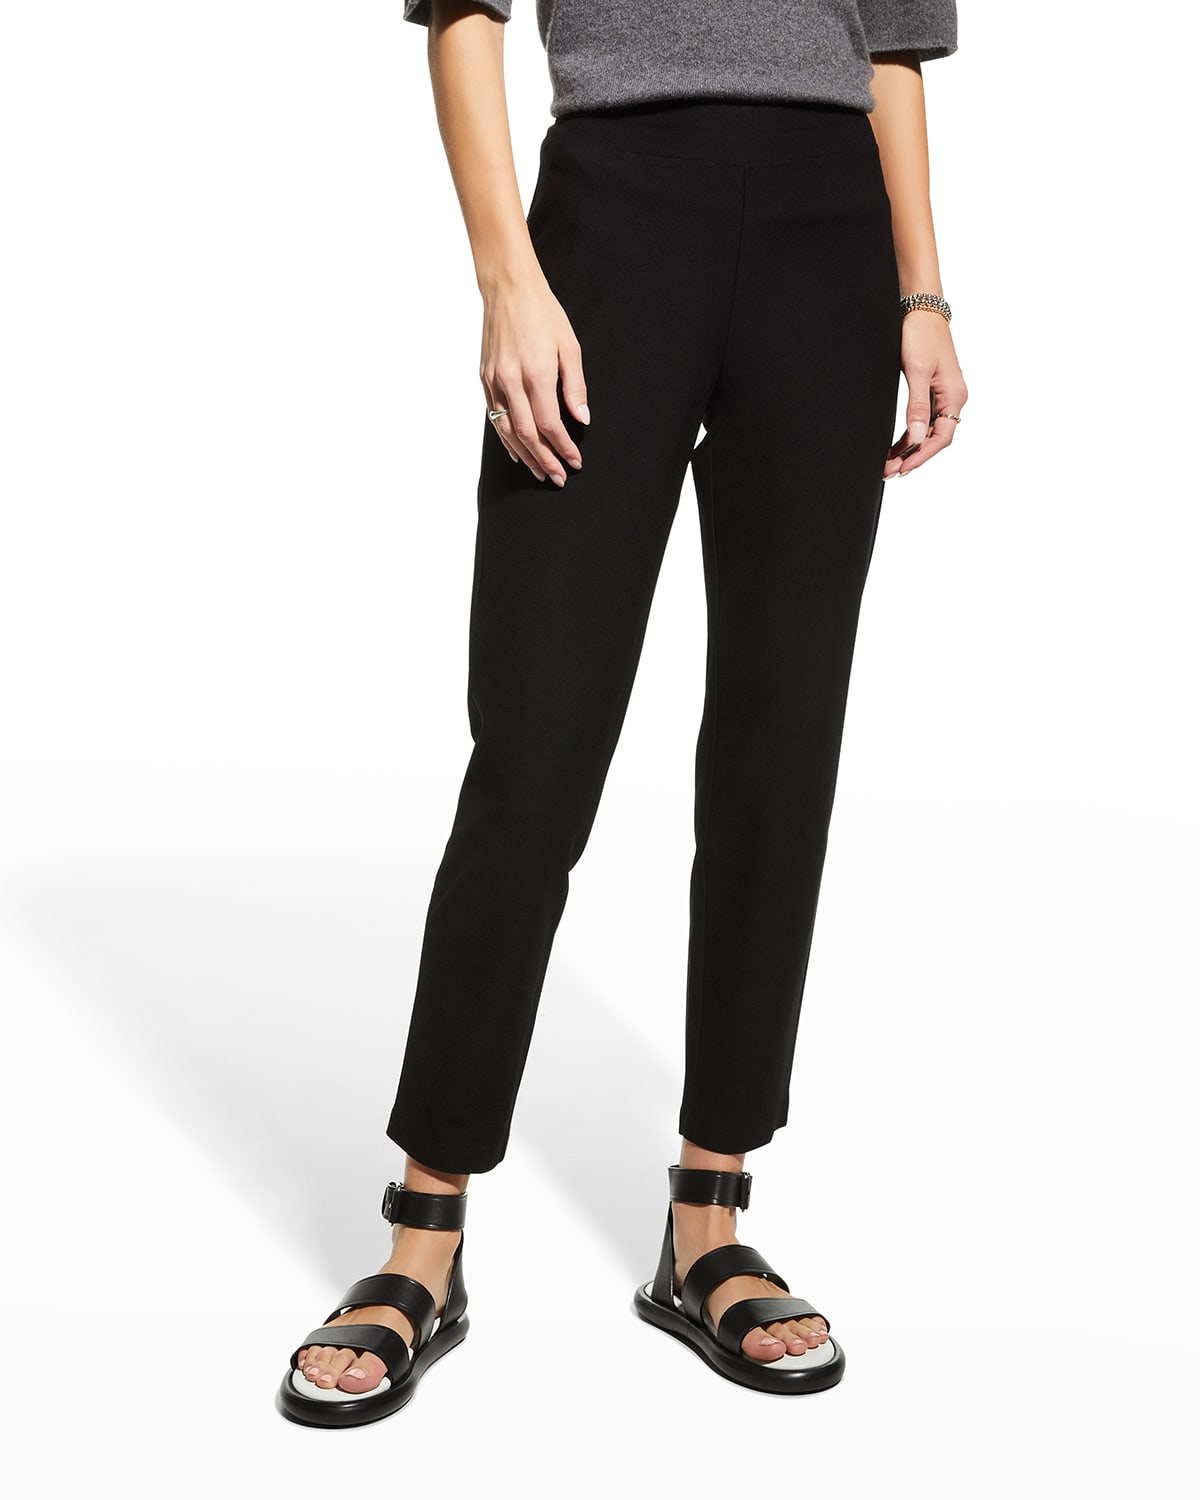 Eileen Fisher Black Pants Ponte Pull On Stretch Size Medium